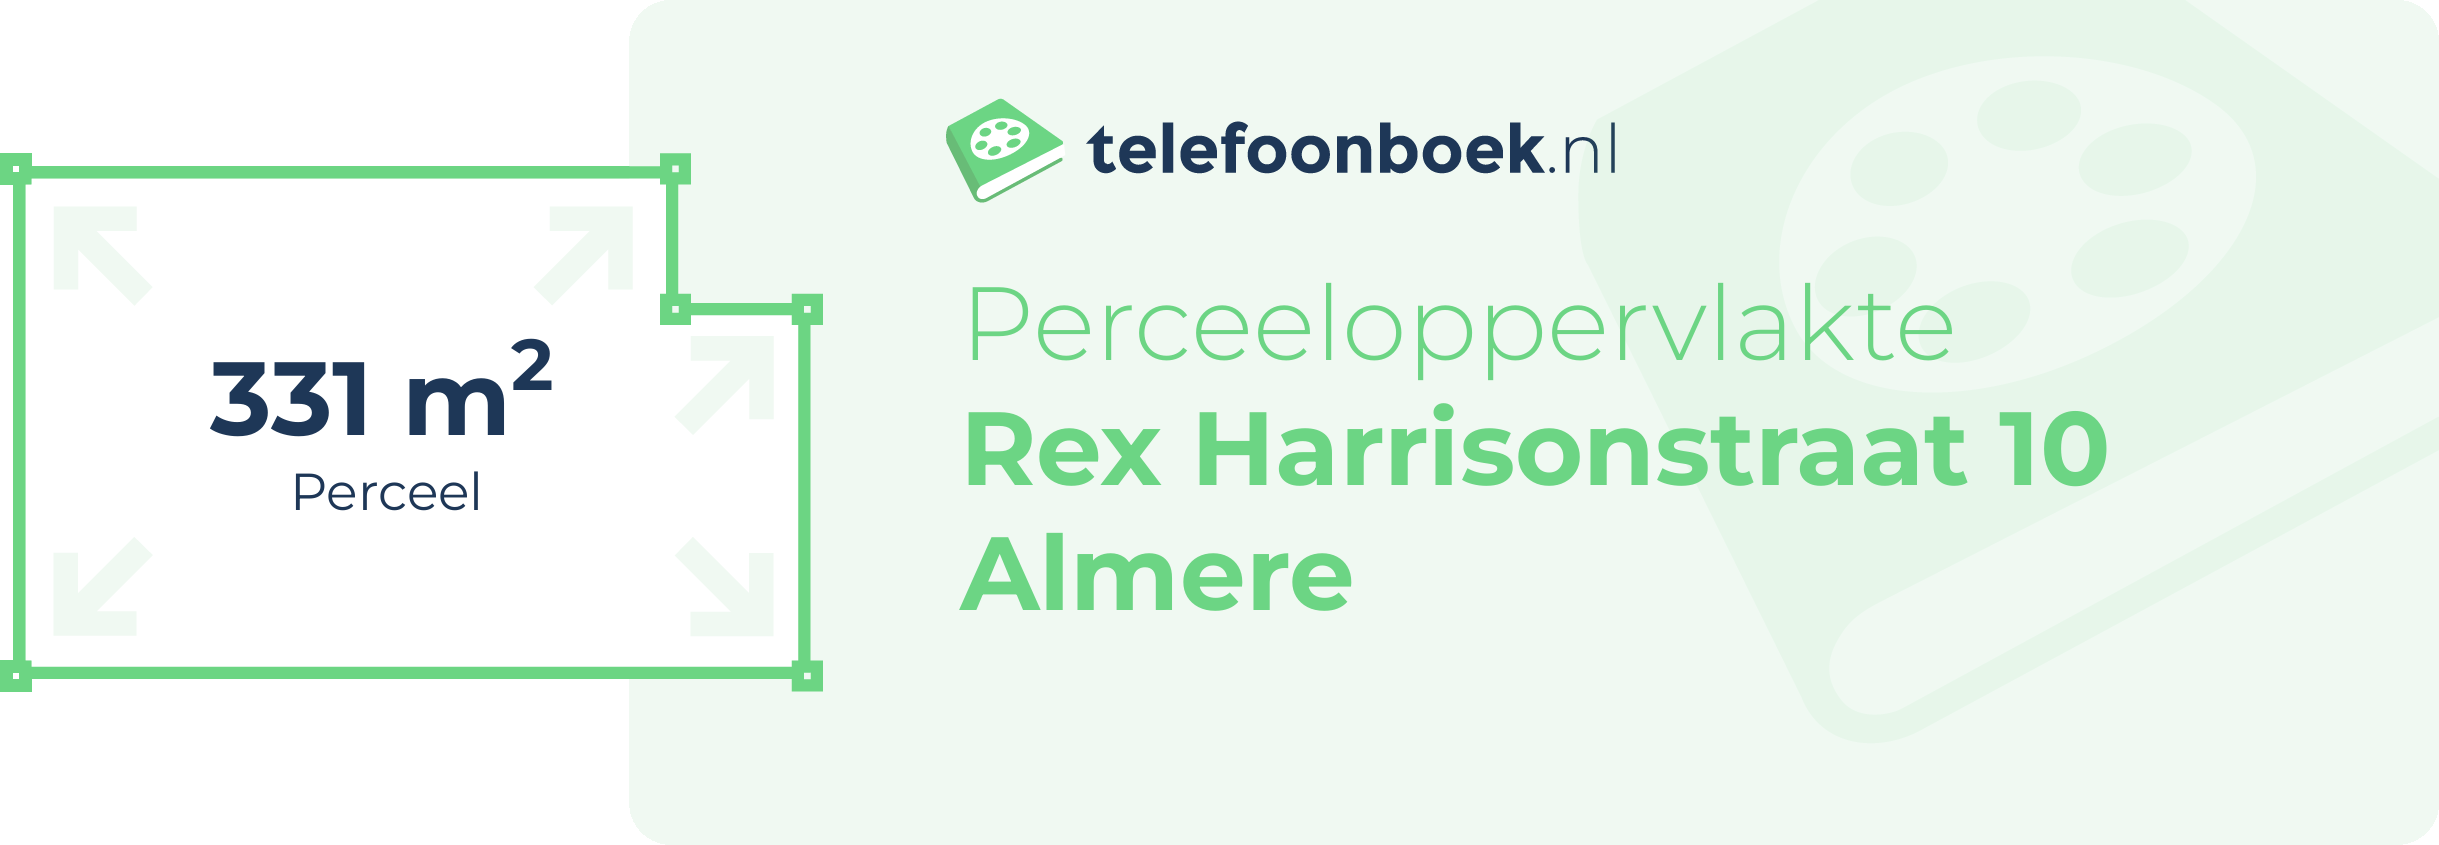 Perceeloppervlakte Rex Harrisonstraat 10 Almere